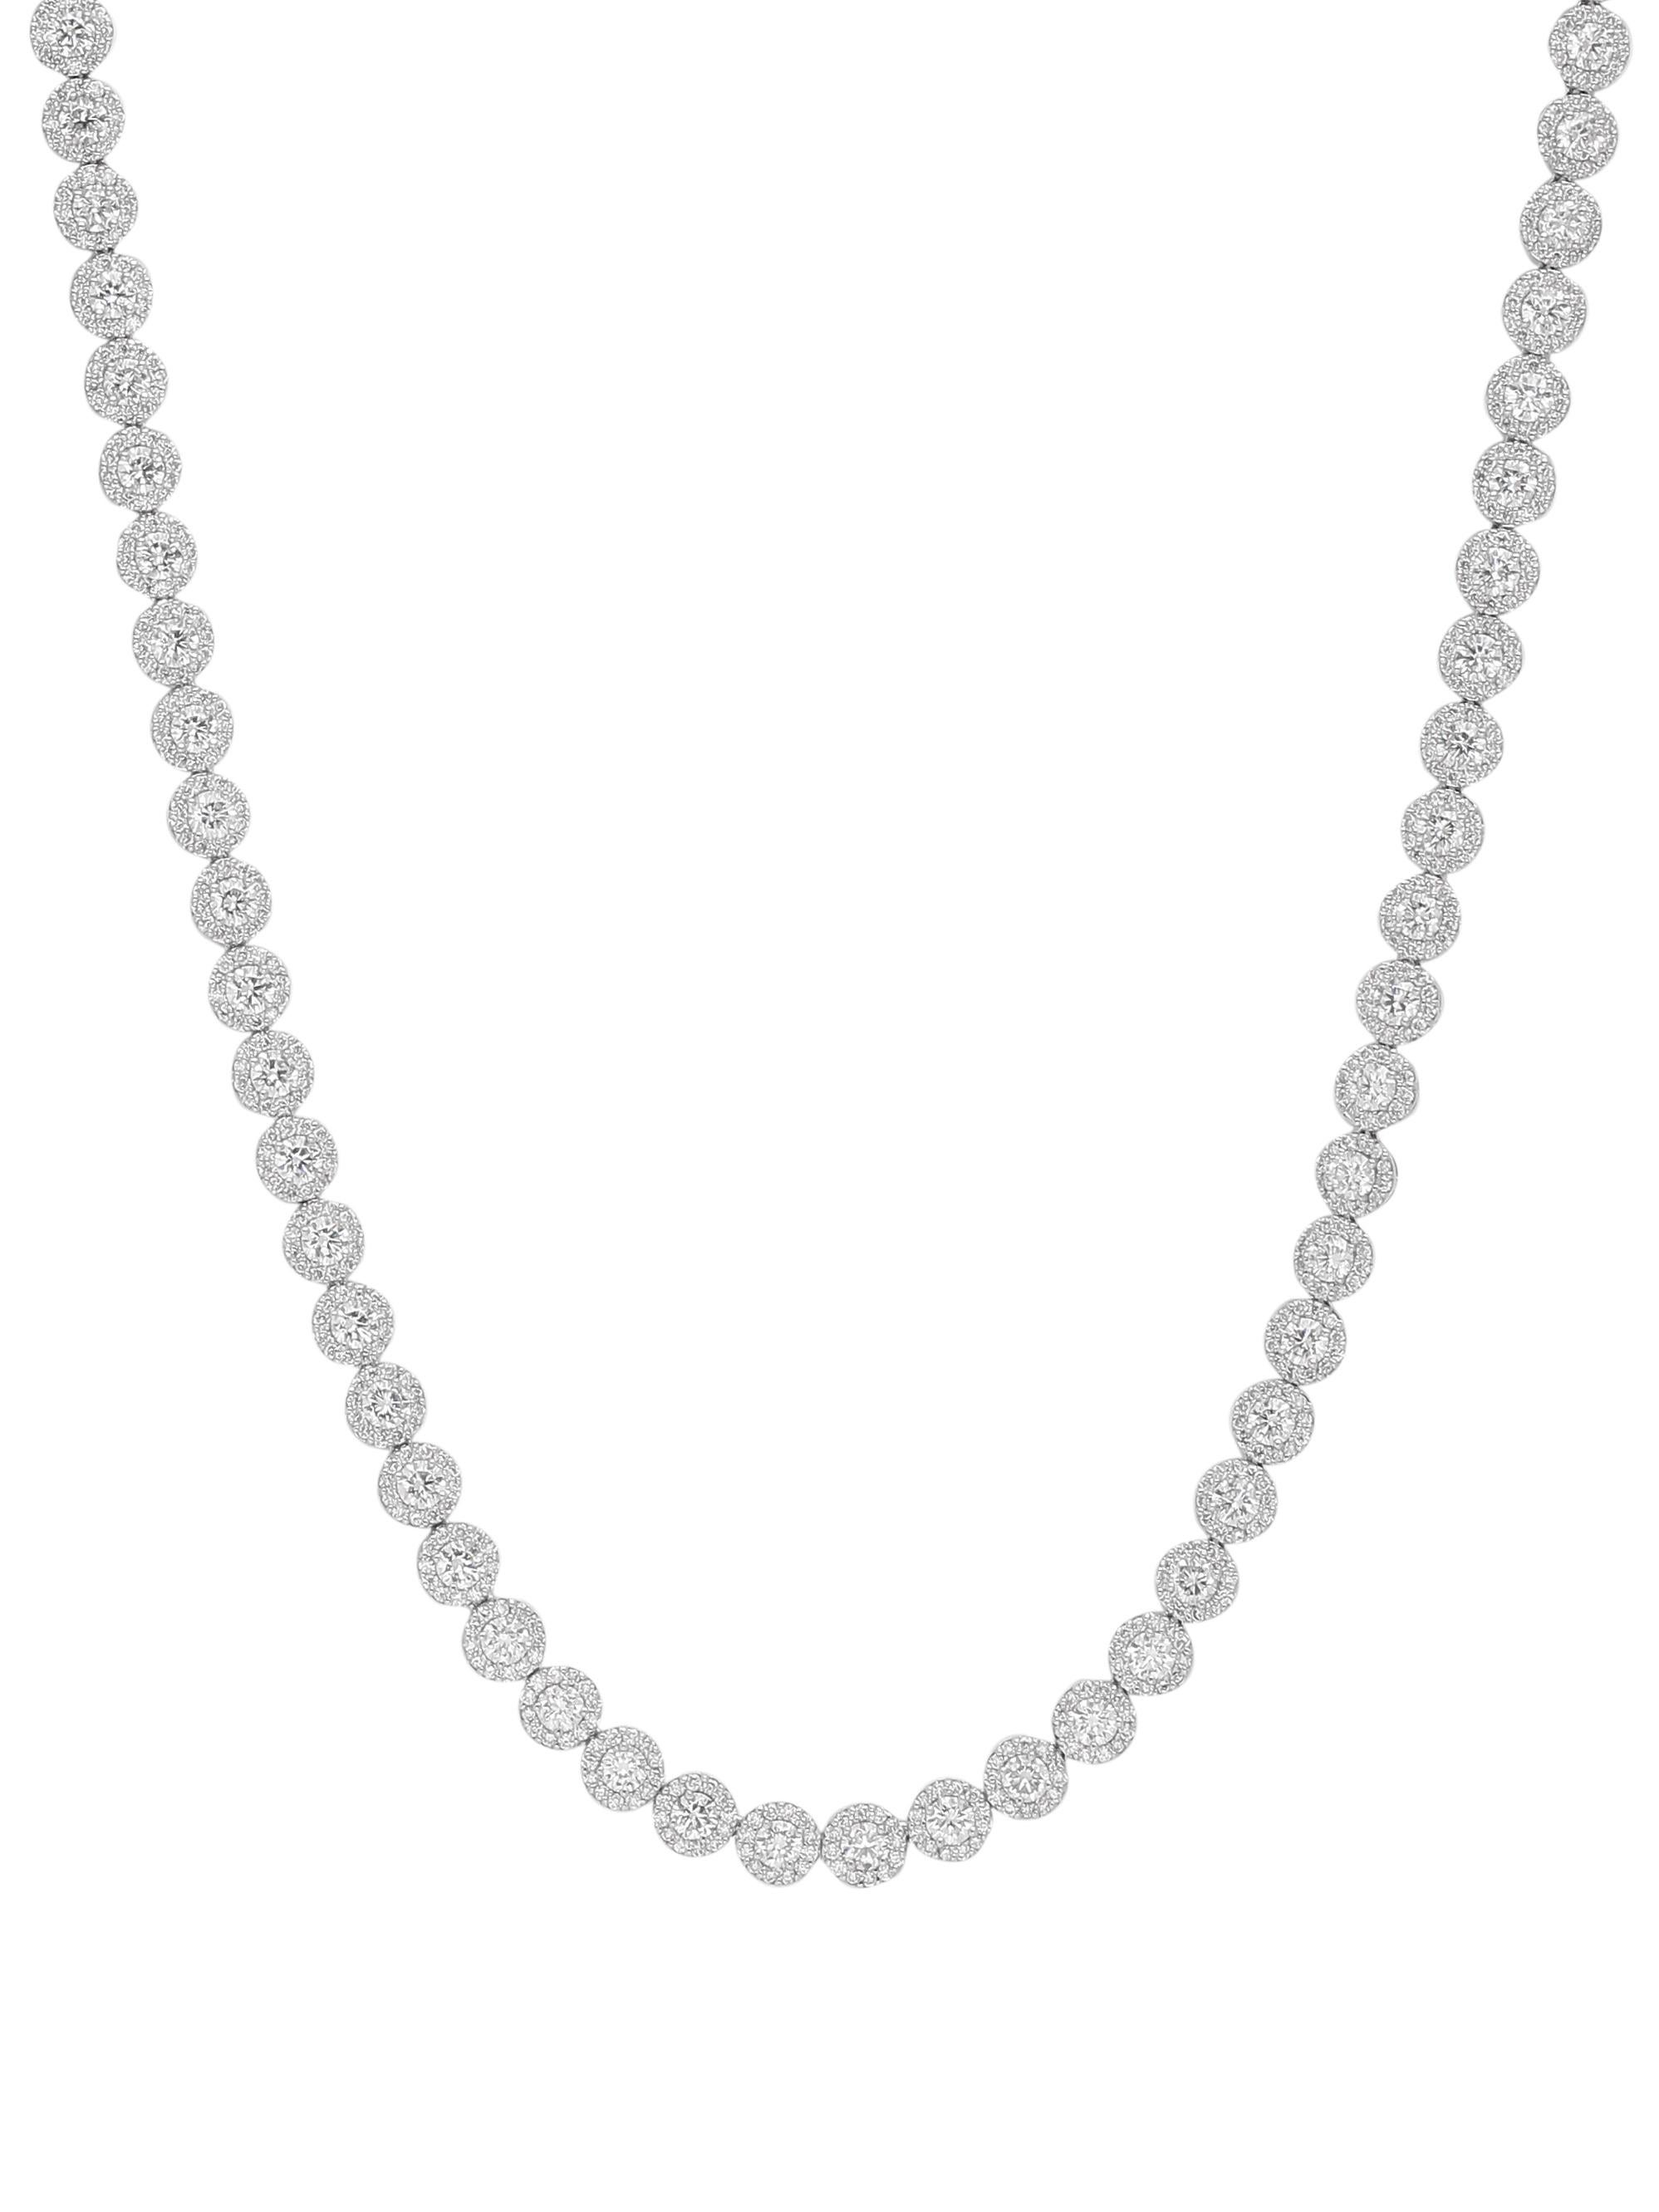 Modern 14.71 Carat Top Quality Diamond Classic Necklace in 18 Karat White Gold